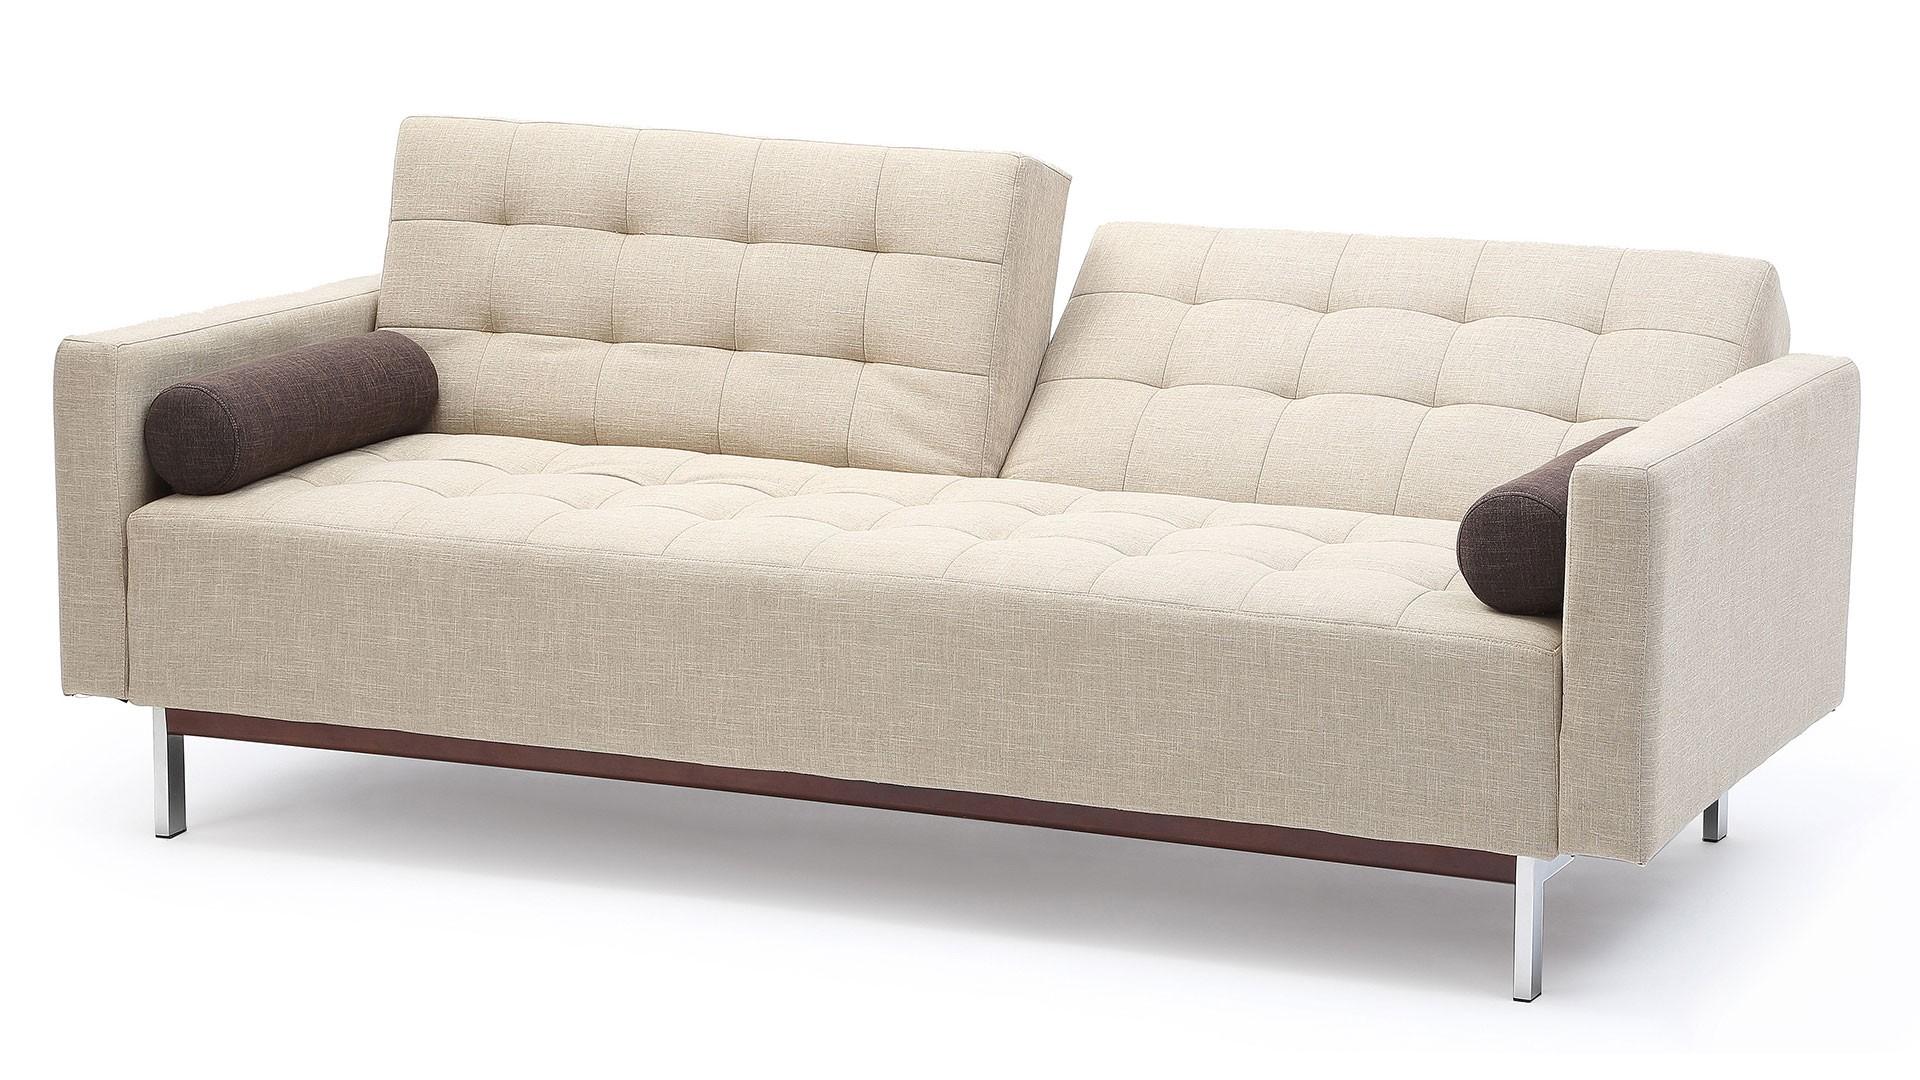 

    
At Home USA Bonaventura Sofa Sleeper in Beige Chrome Legs Contemporary Style
